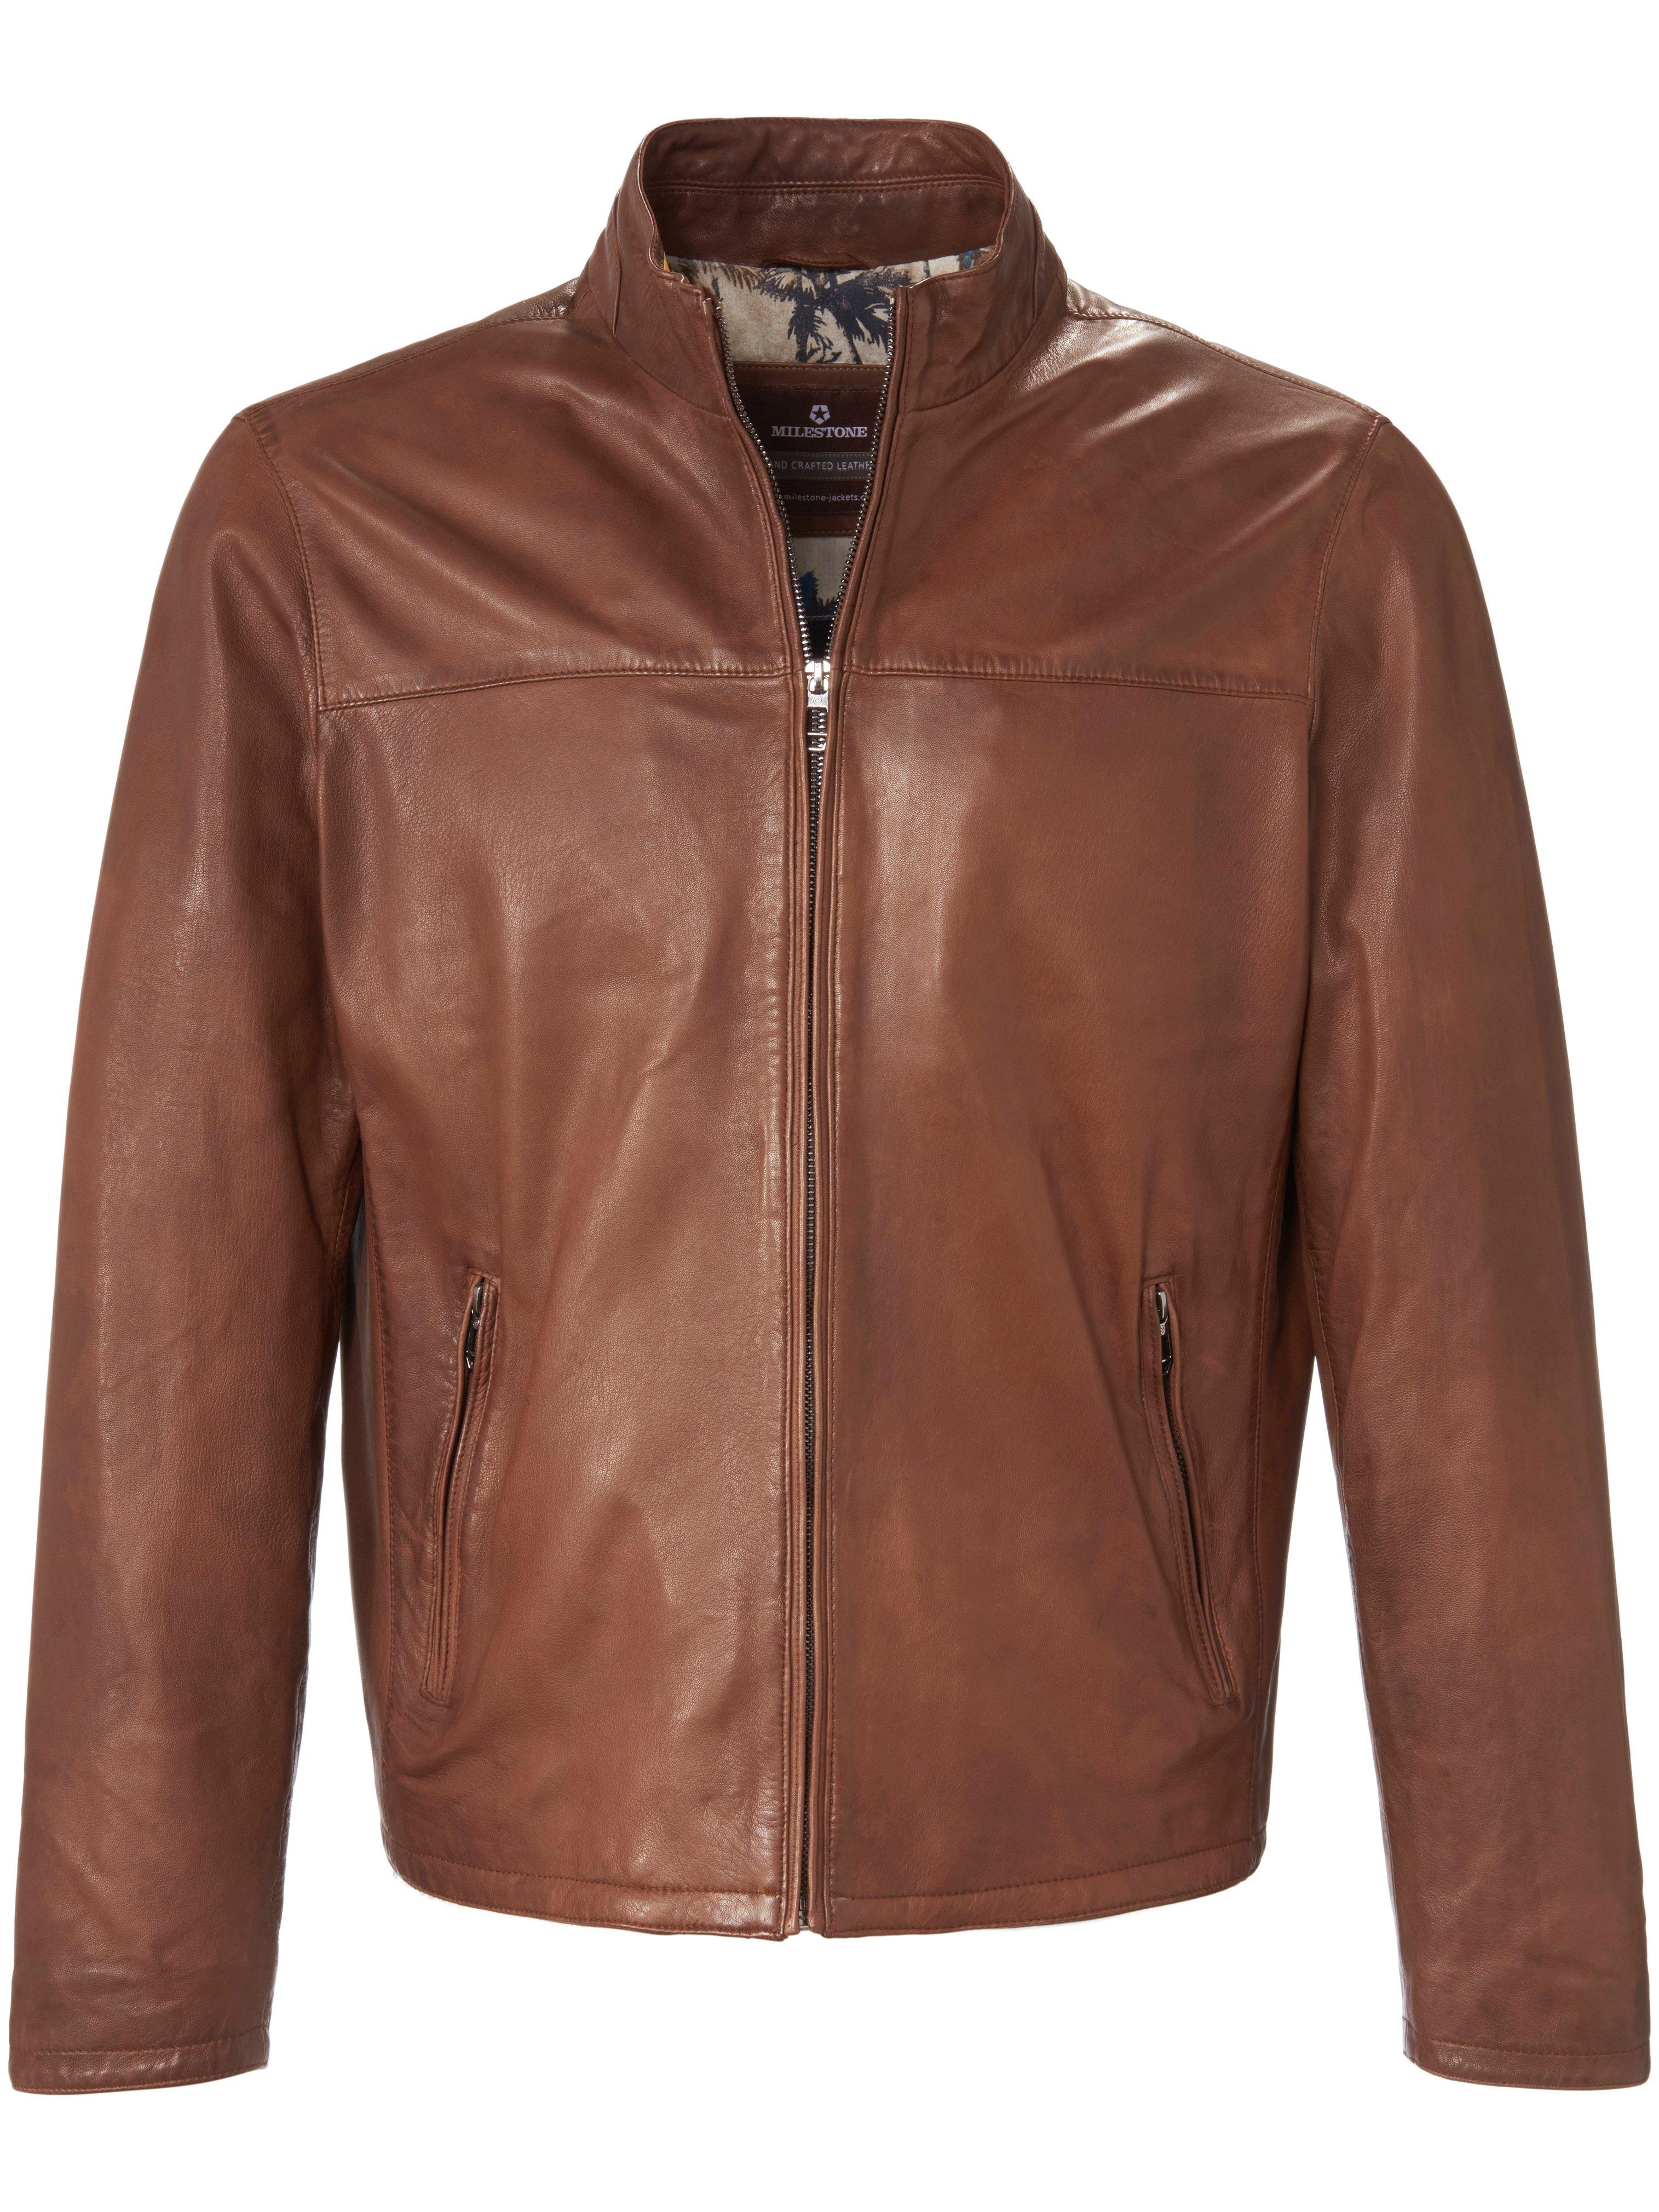 Leather jacket Milestone brown